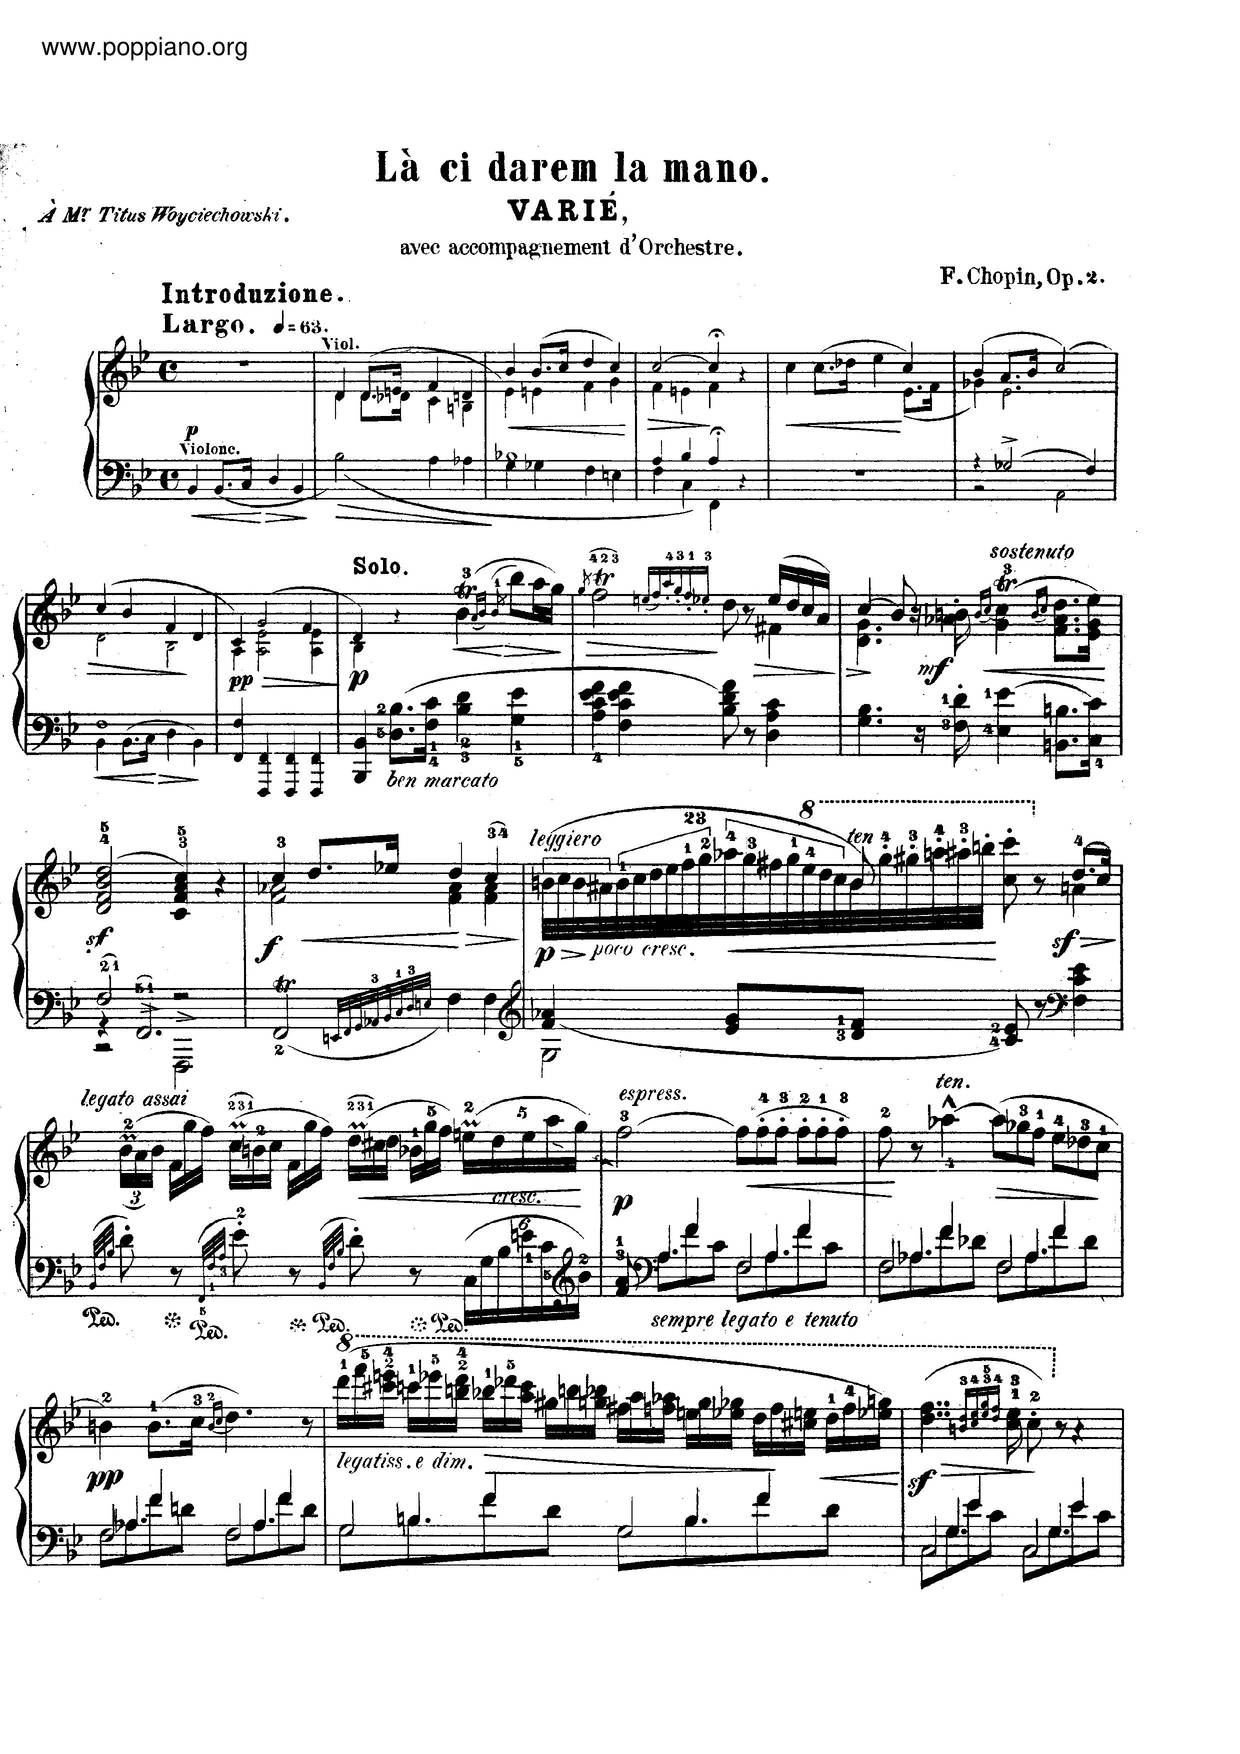 Variations On 'La Ci Darem La Mano', Op. 2琴譜